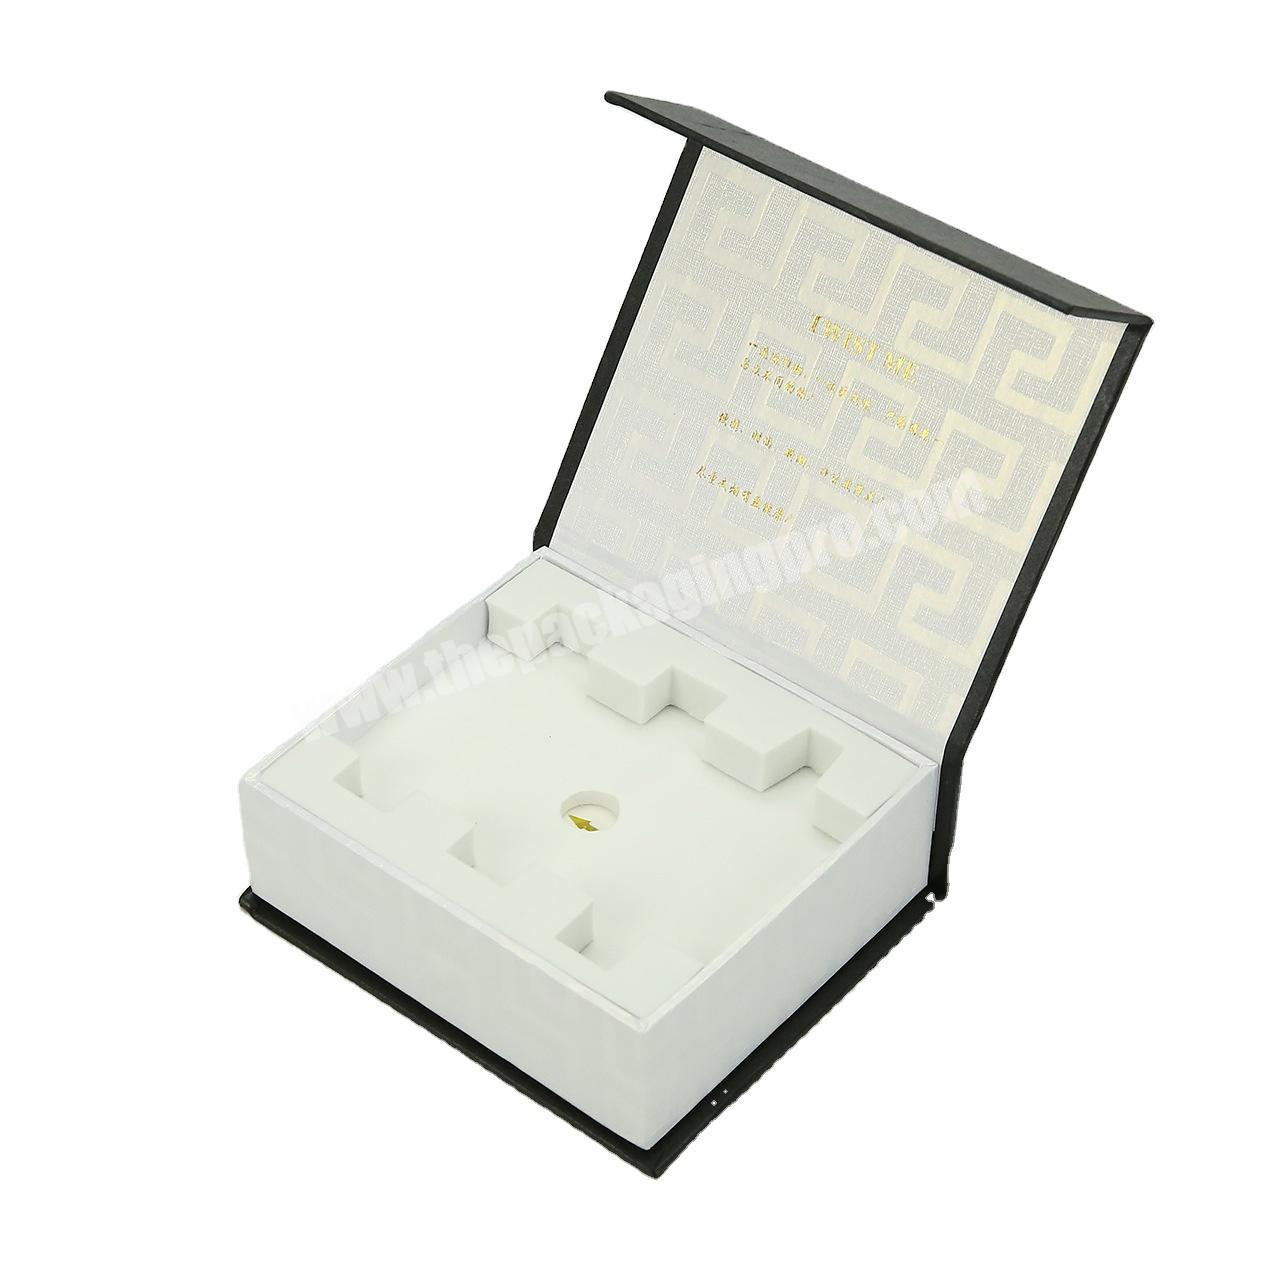 Luxury custom rigid gift packaging box clamshell box product packaging cosmetic packaging box hot silver gold foil